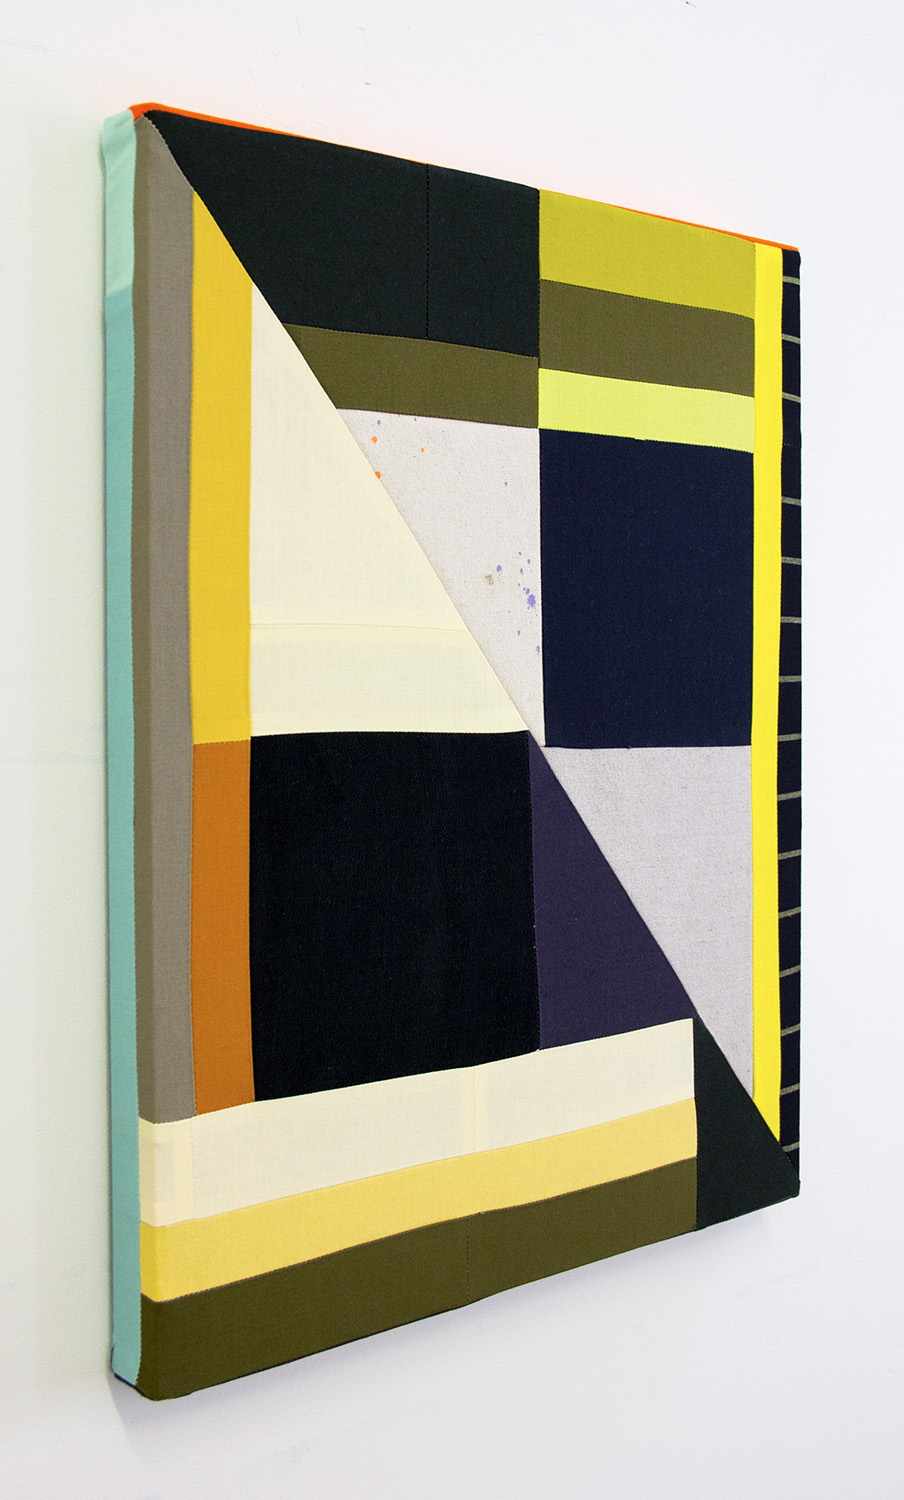    of Color, No. 6 (side view)   ,  2019 Sewn canvas, cotton, Levi’s denim, acrylic 20 x 16 inches (50.8 x 40.6 cm) 